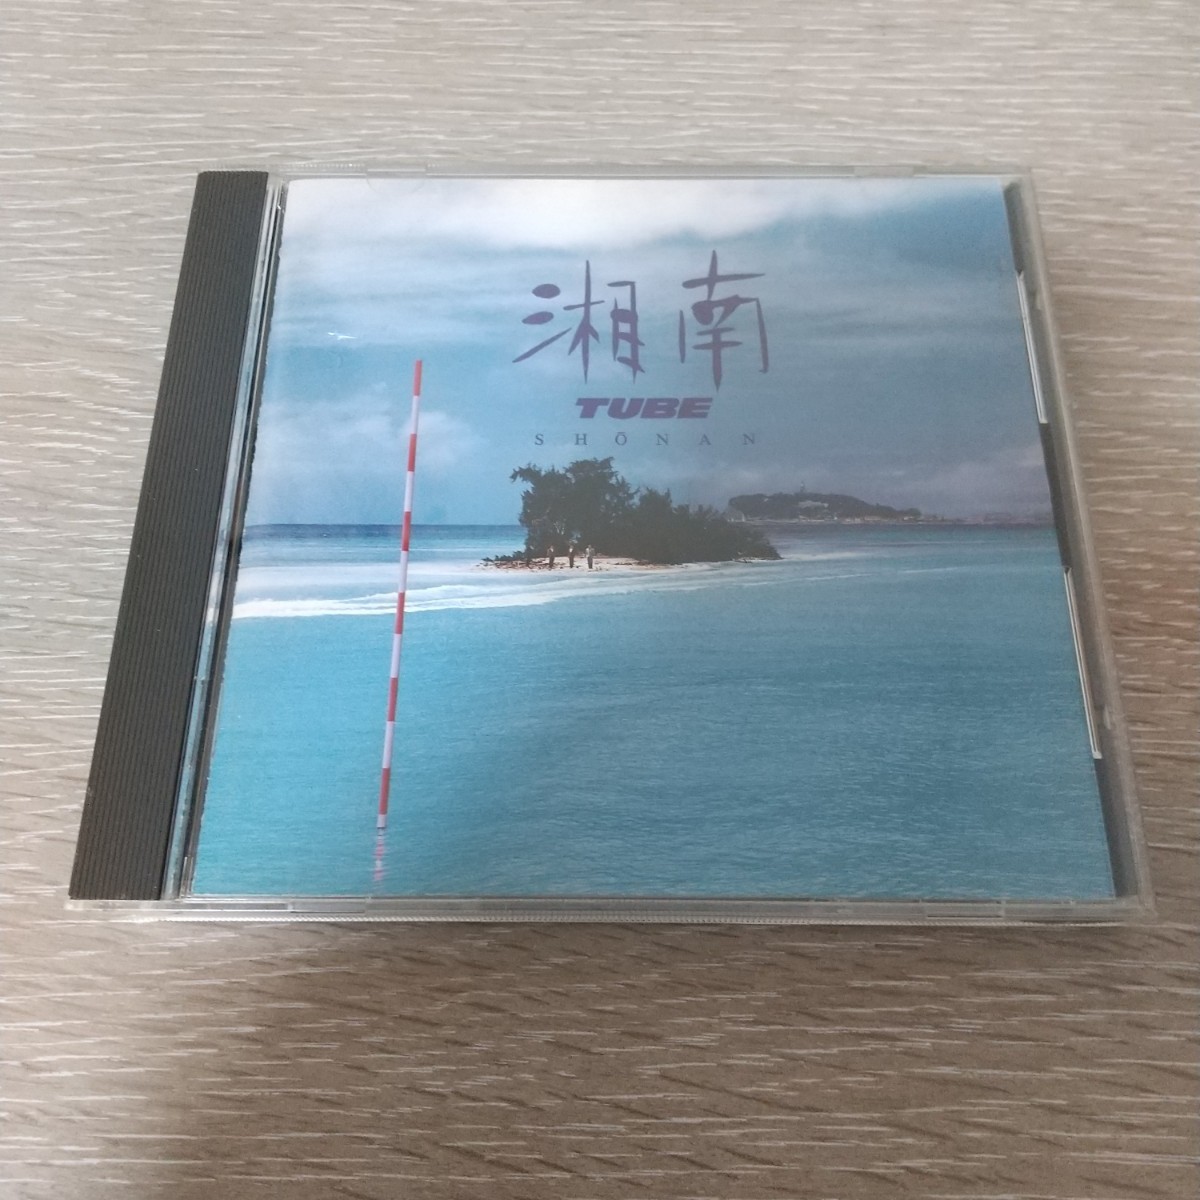 TUBE 湘南 限定盤 CD キャリングケース(缶ケース)付き_画像9